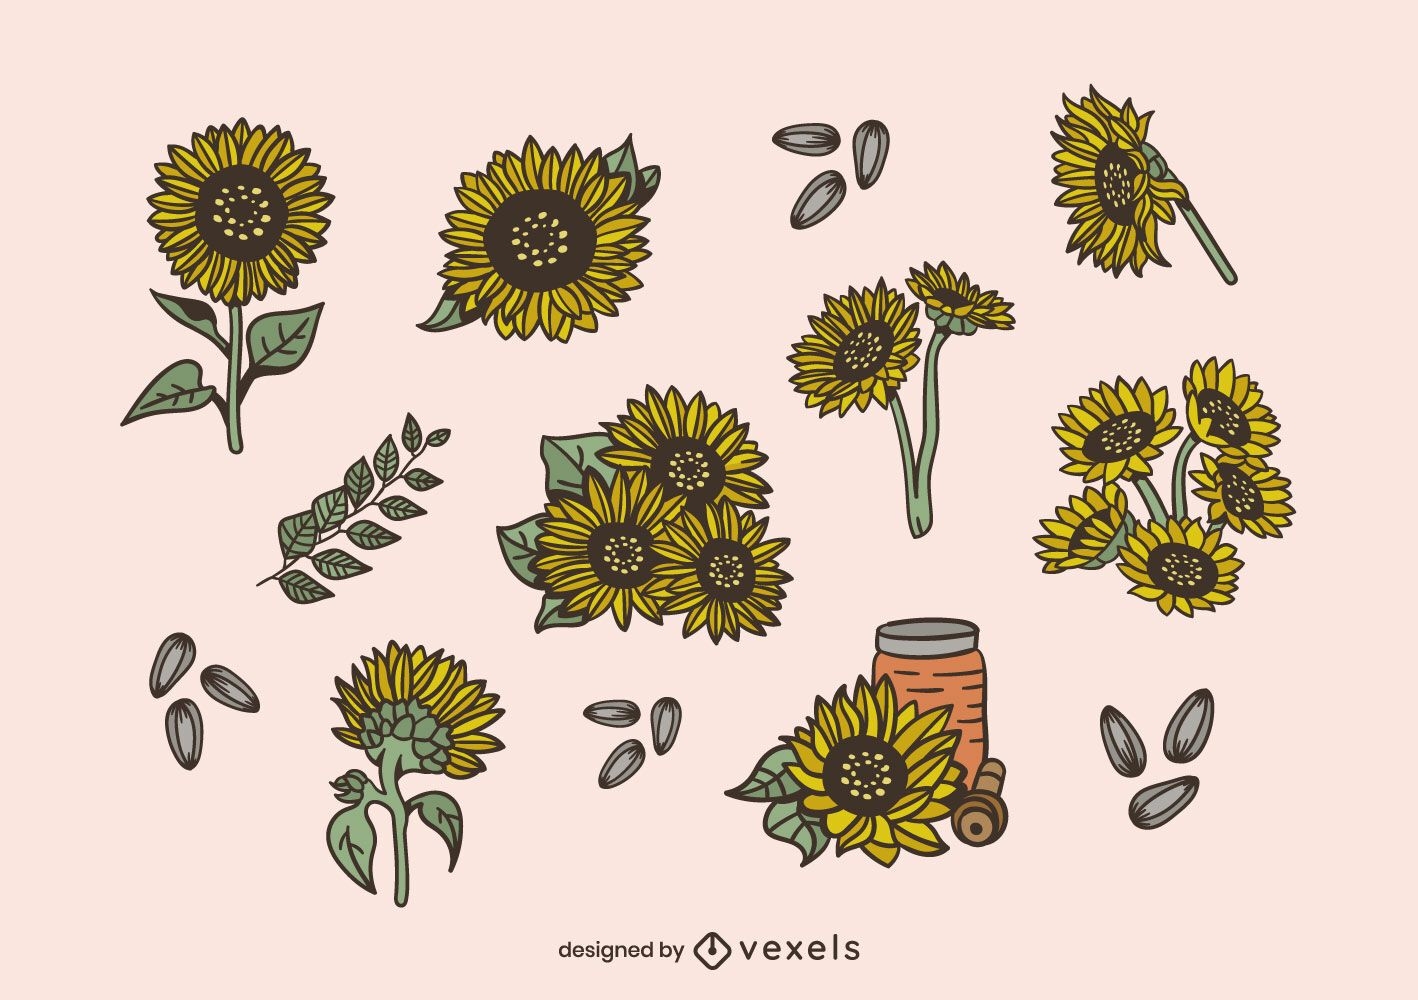 Sunflowers illustration design set